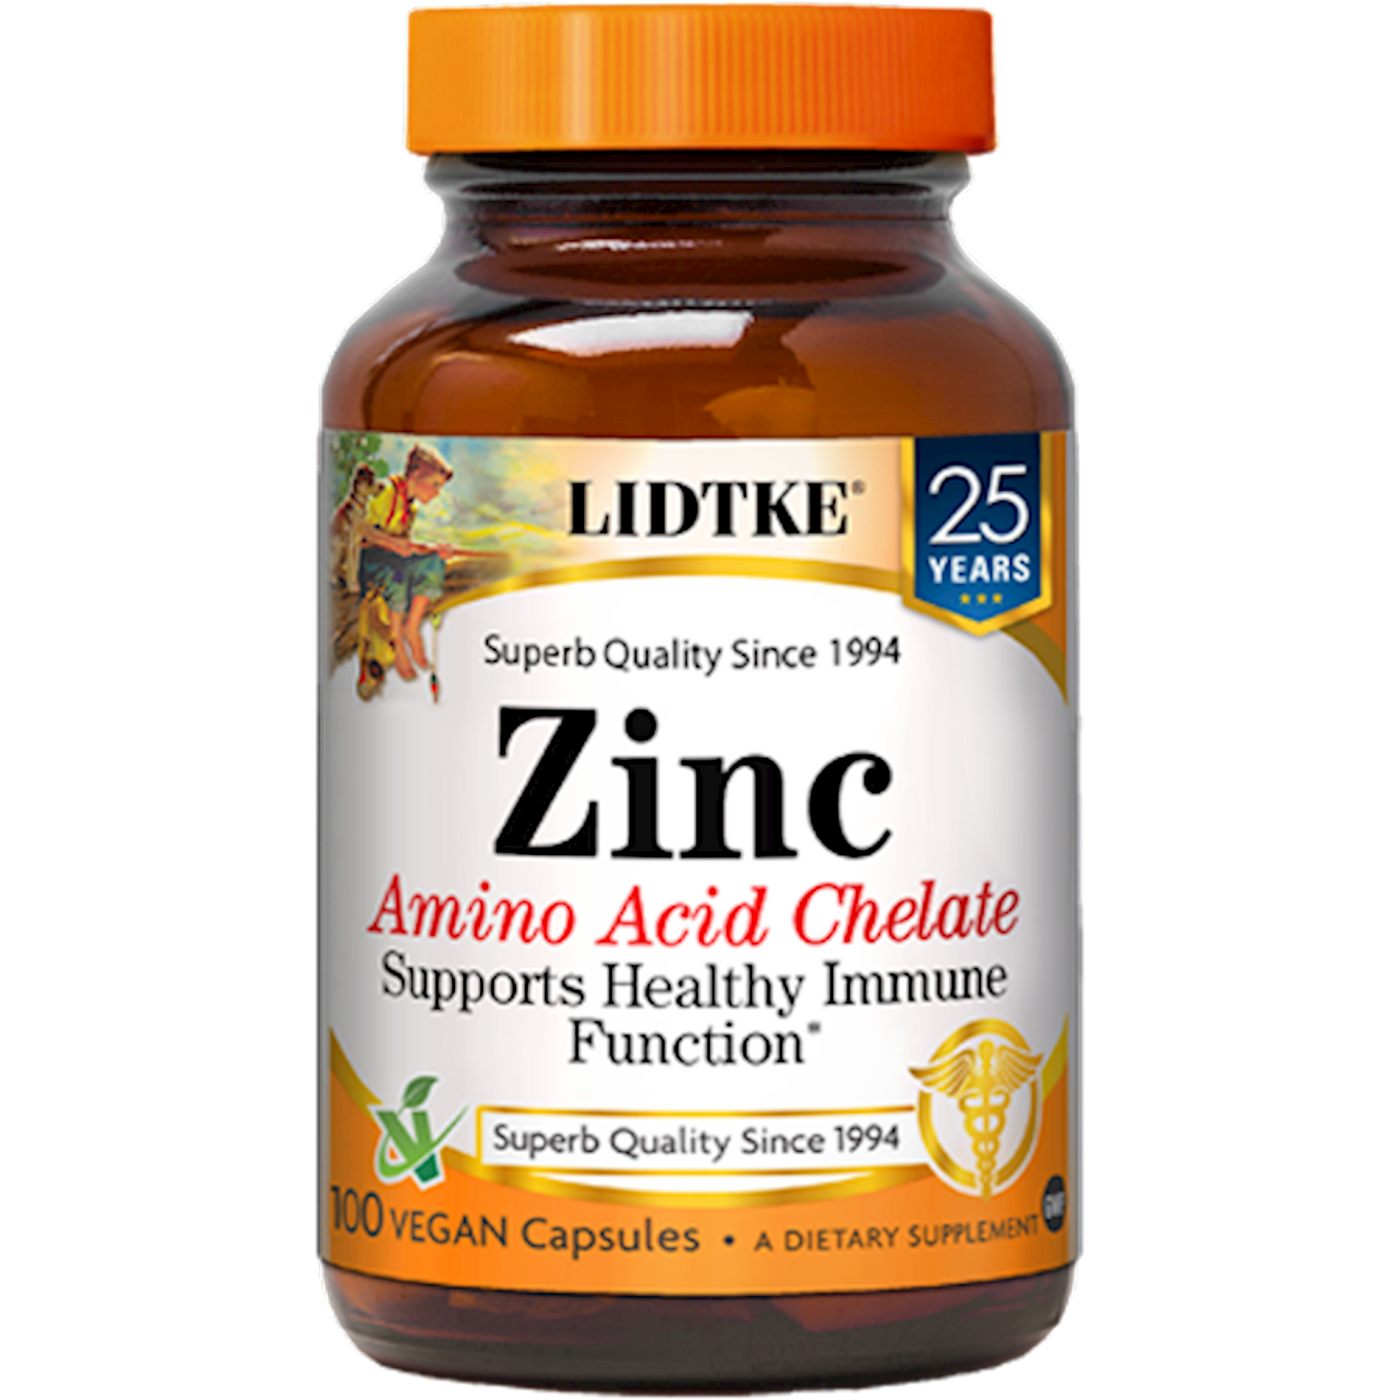 Zinc 50 mg 100 vegcaps Curated Wellness